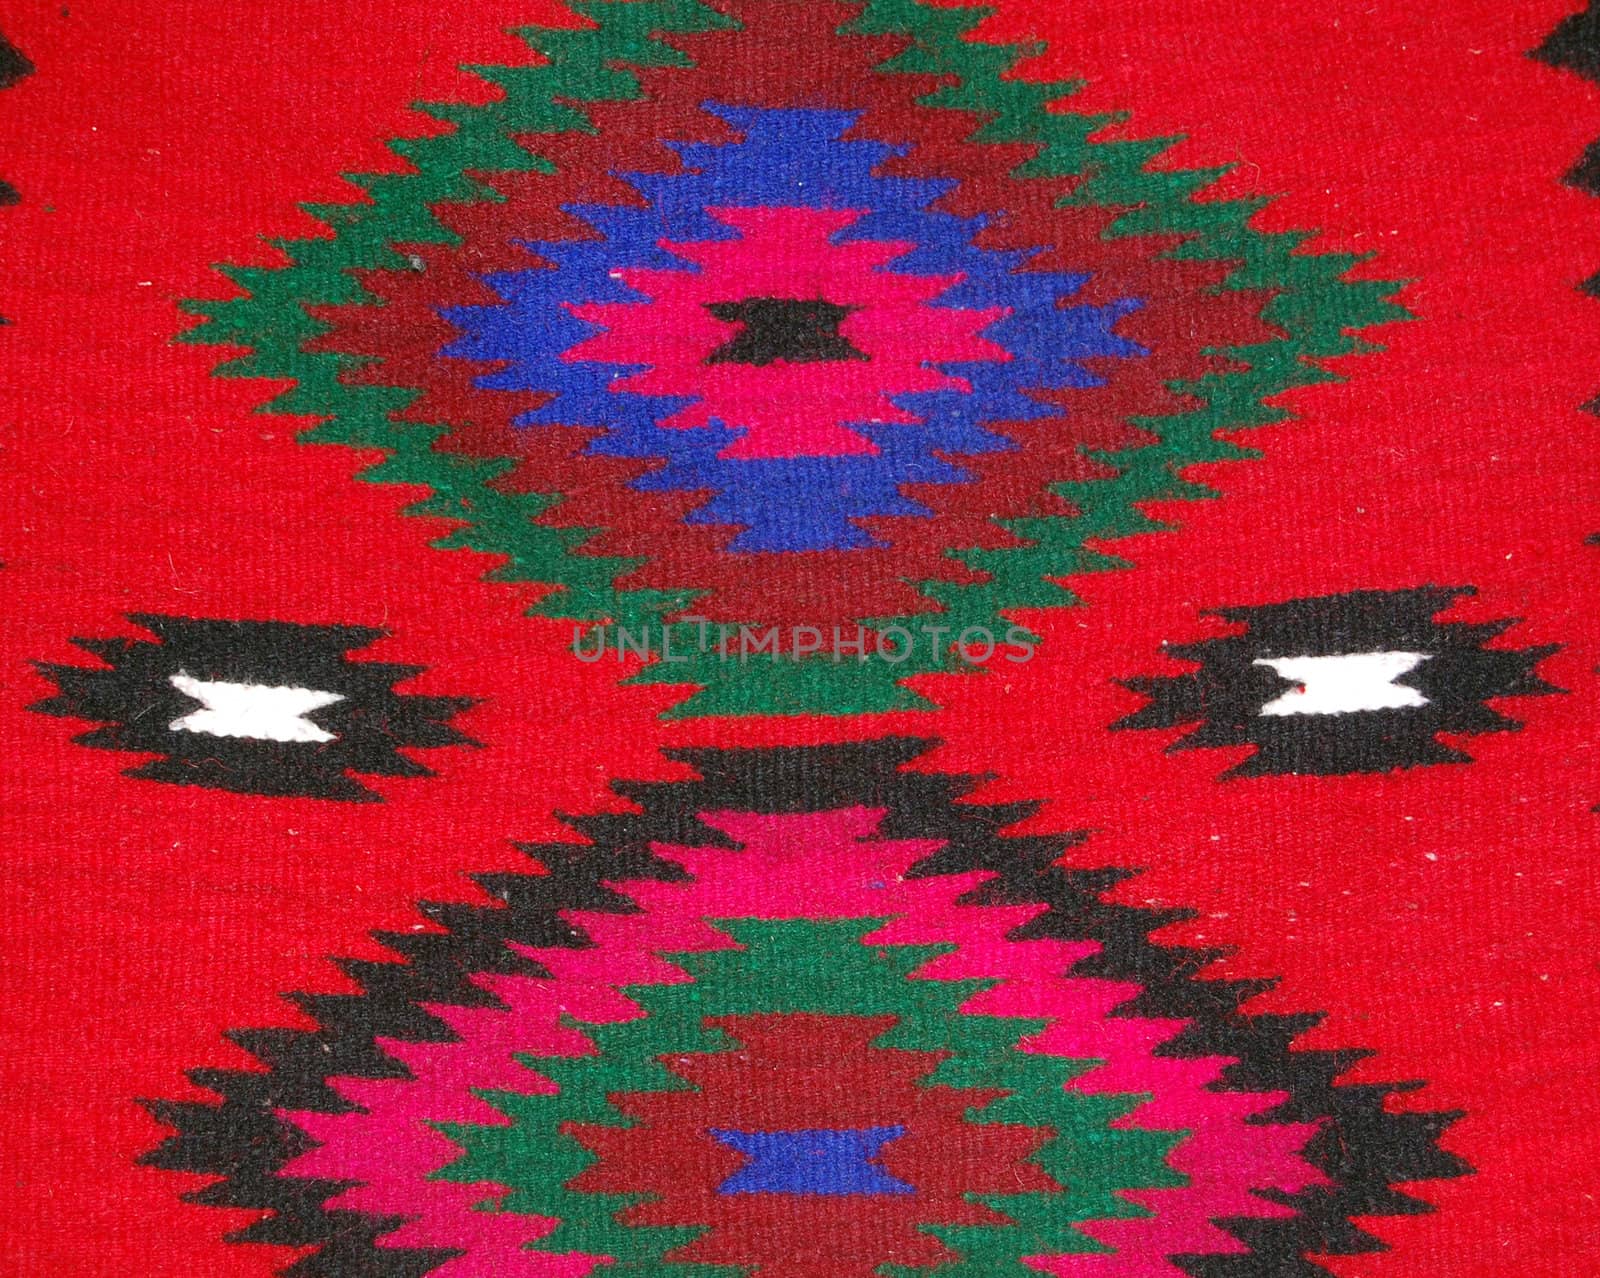 Traditional Macedonian Carpet Patterns